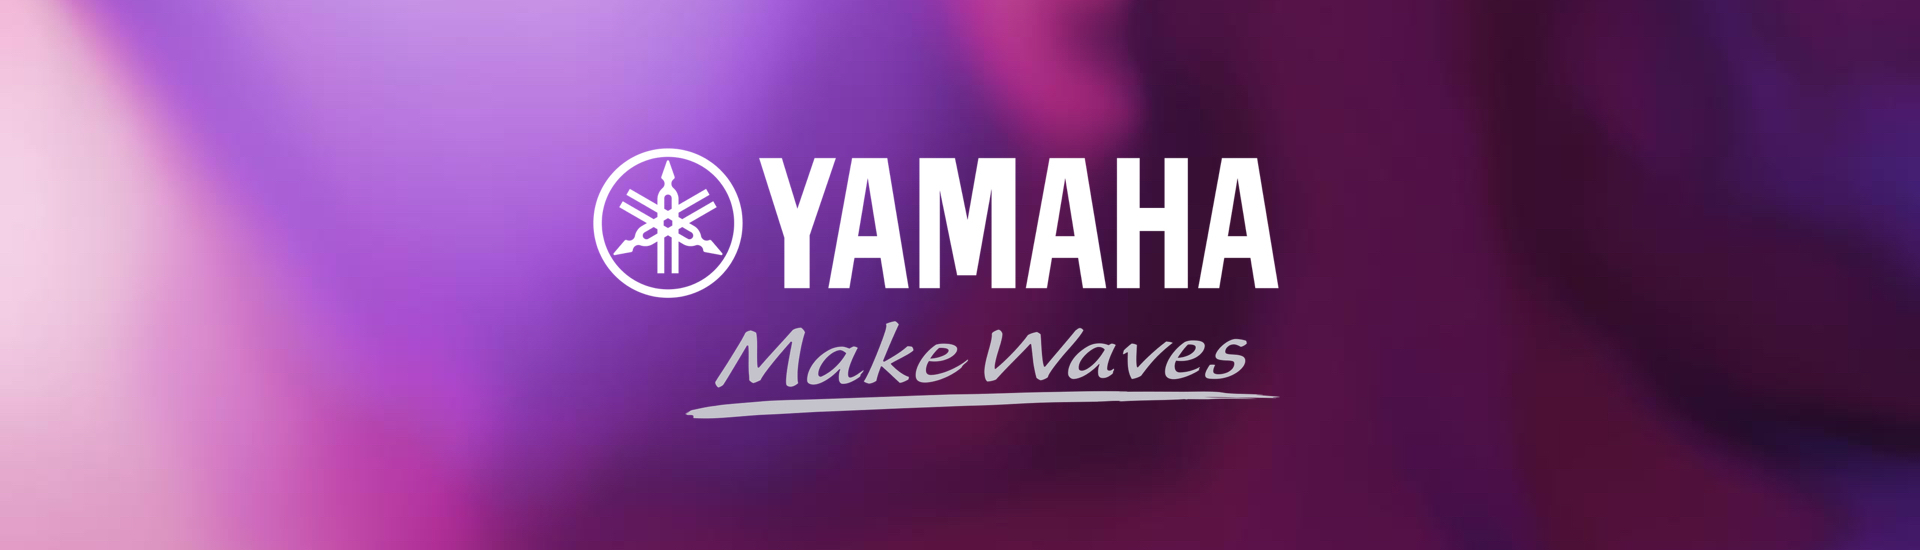 yamaha make waves head